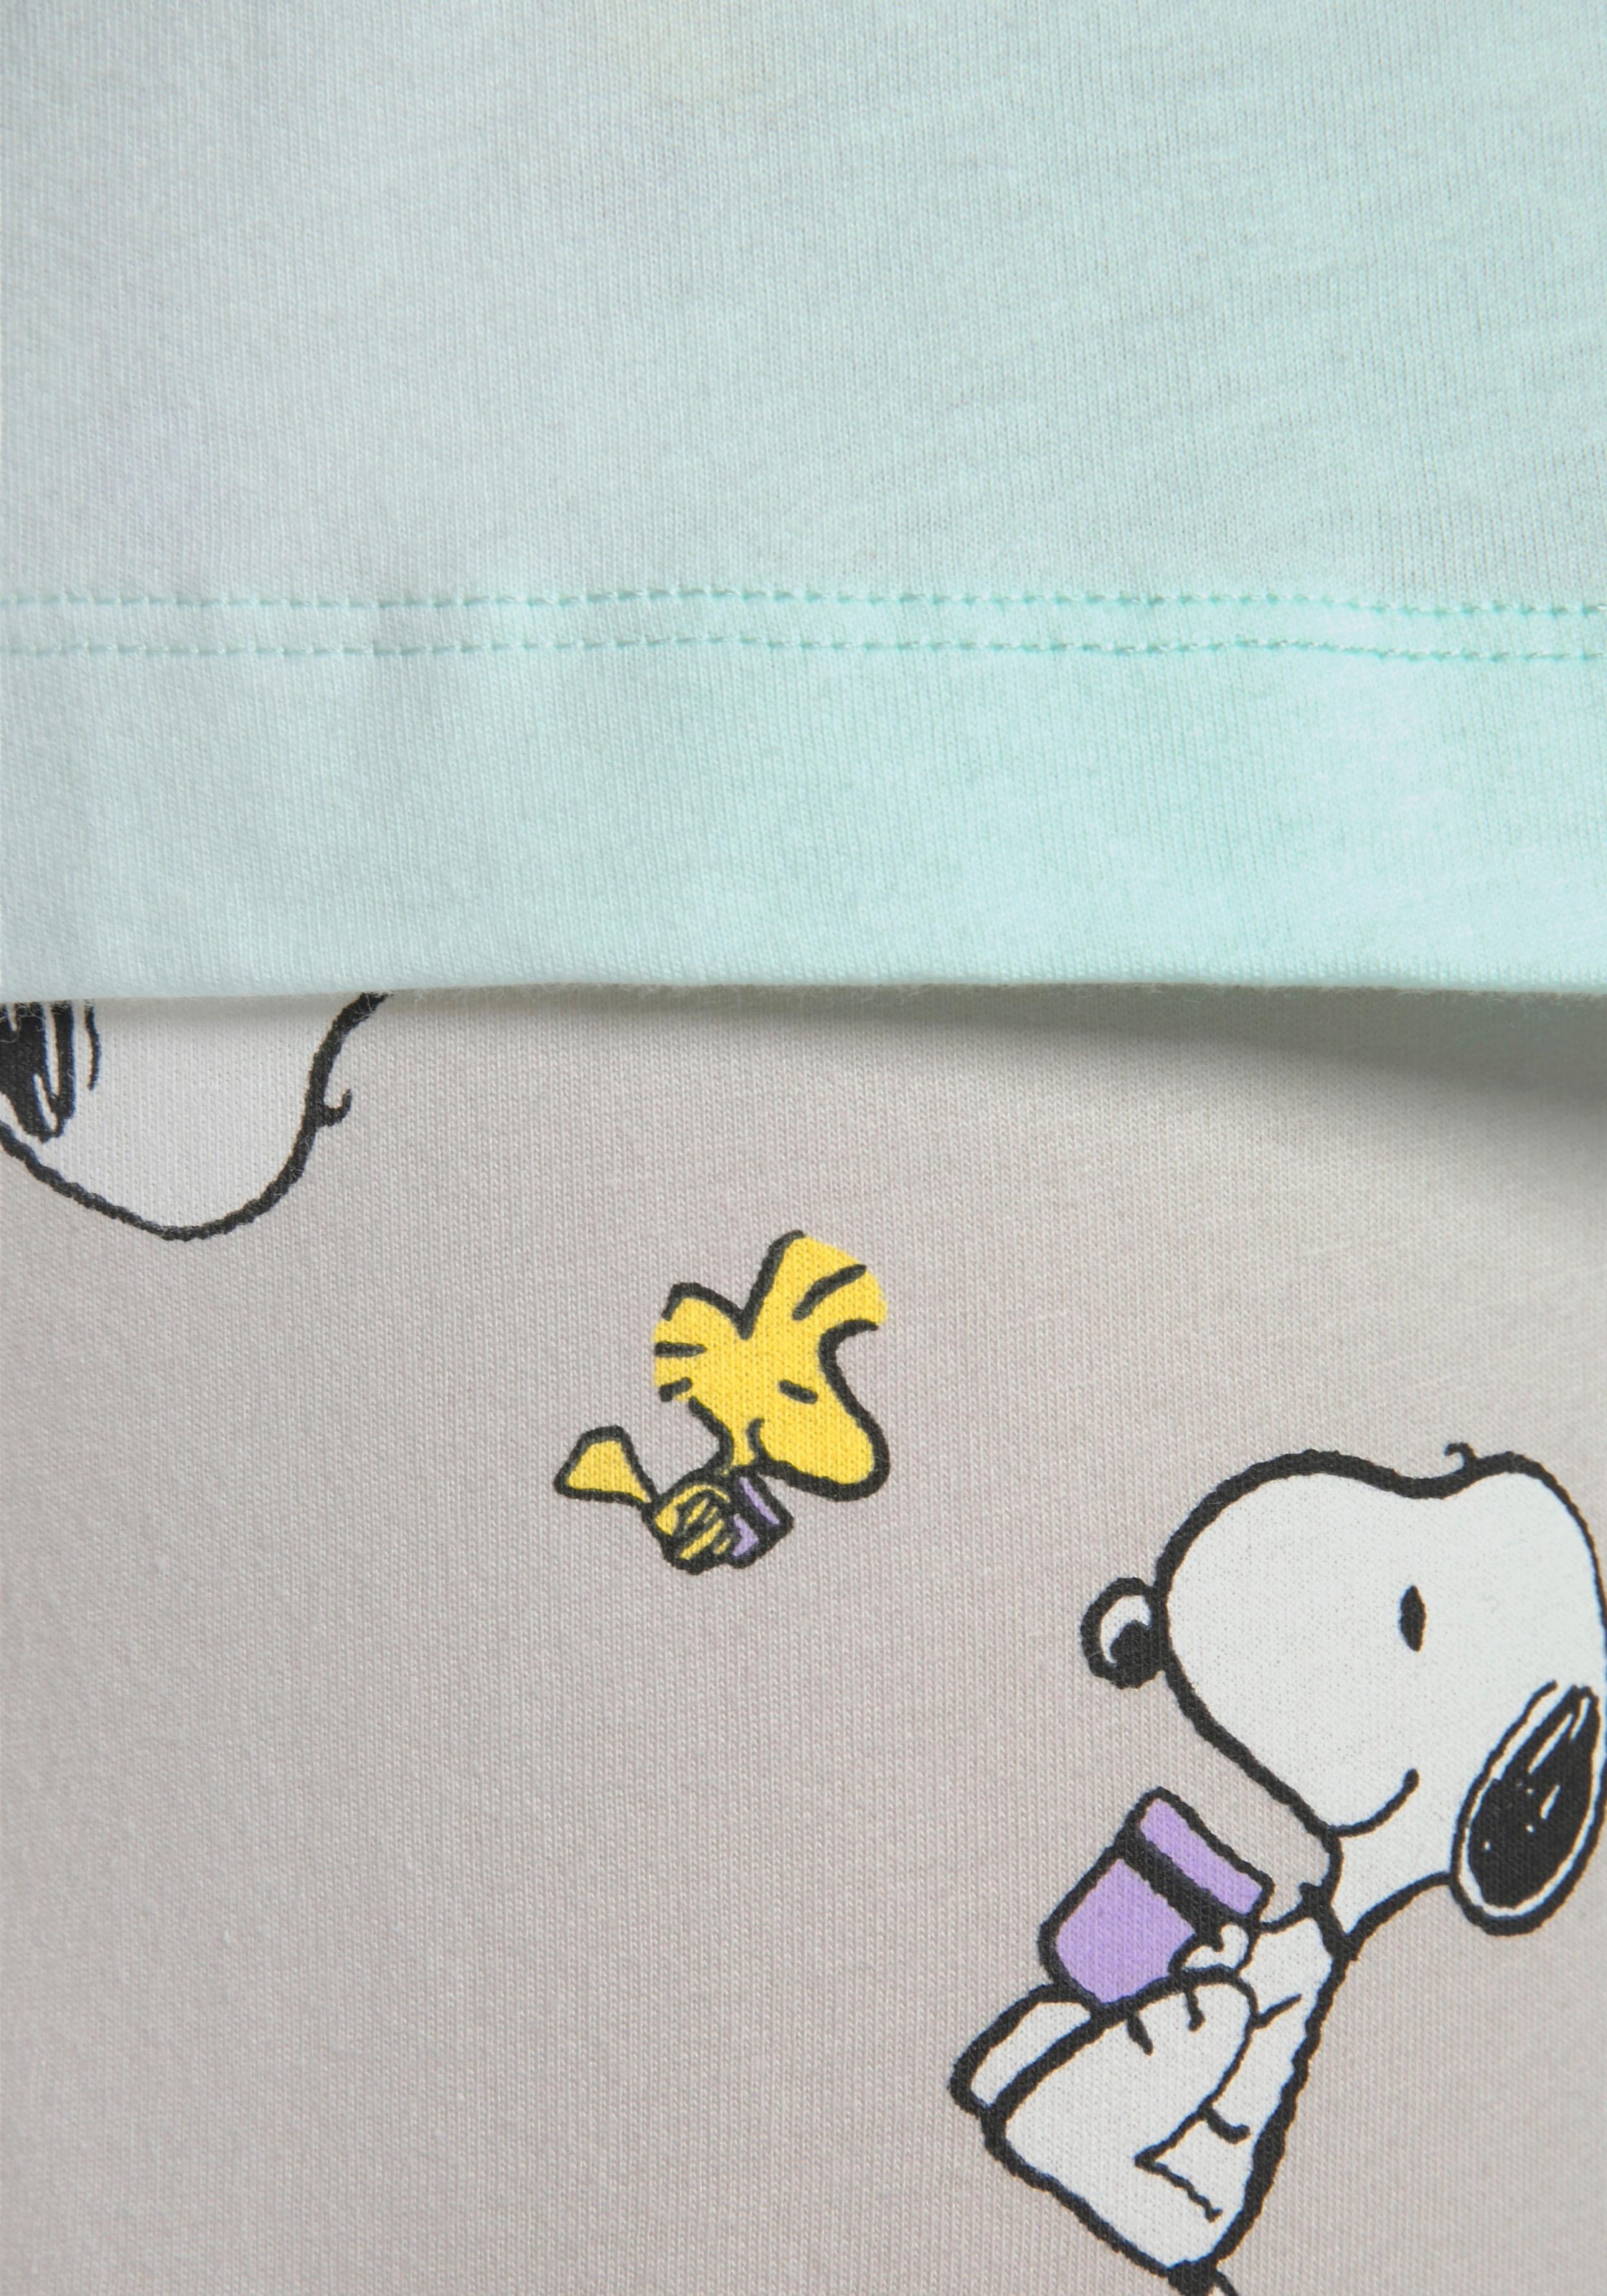 Peanuts Pyjama mit Print online kaufen | BAUR